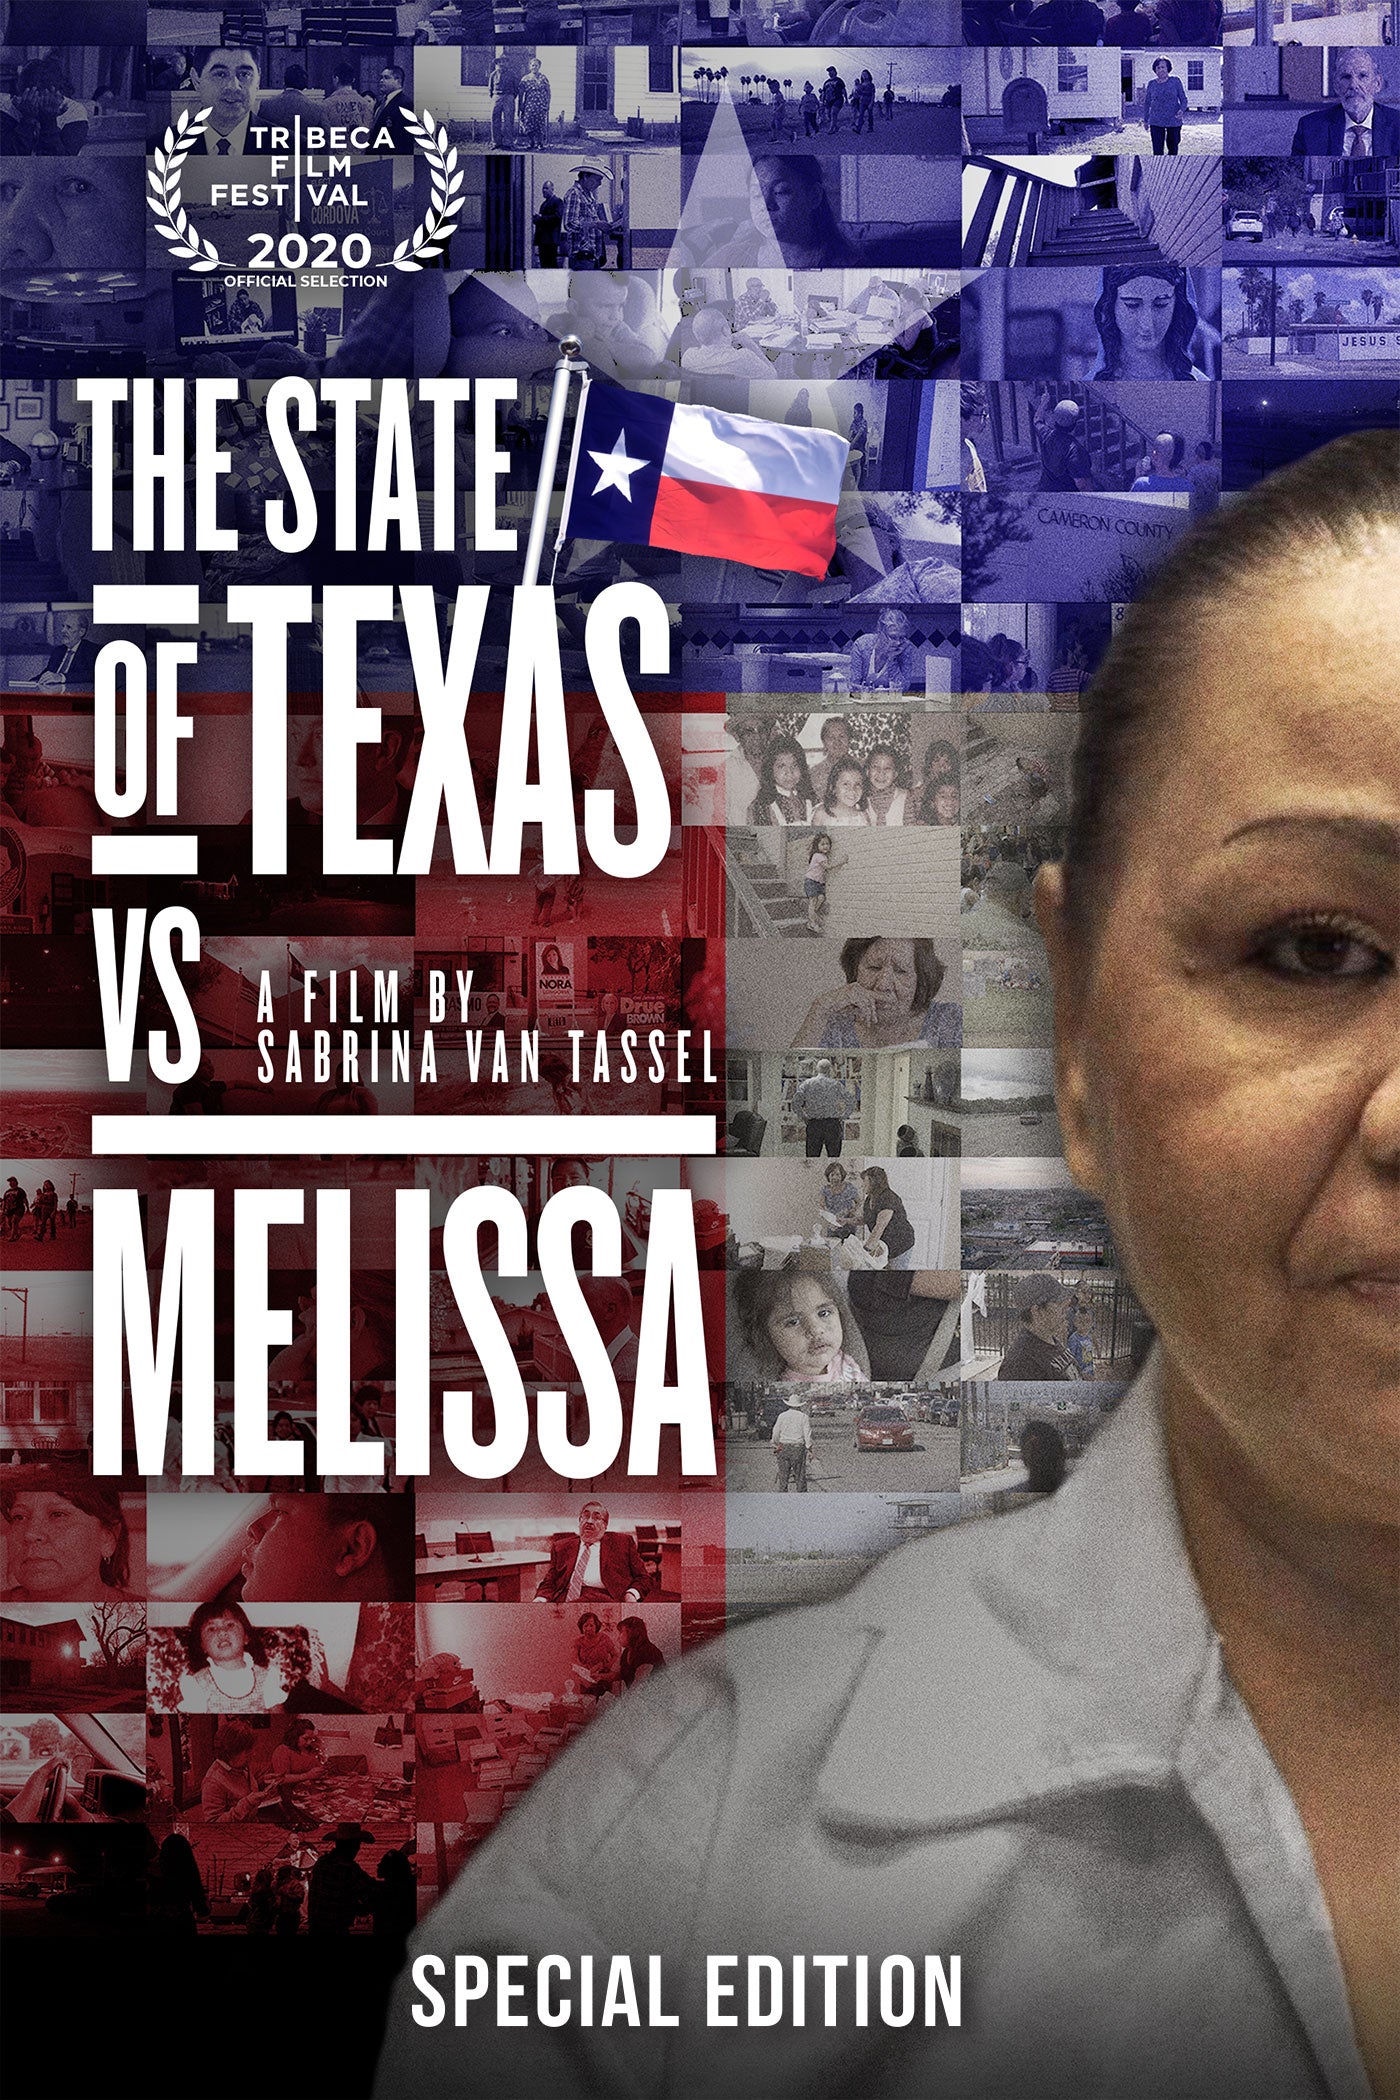 State of Texas vs. Melissa cover art